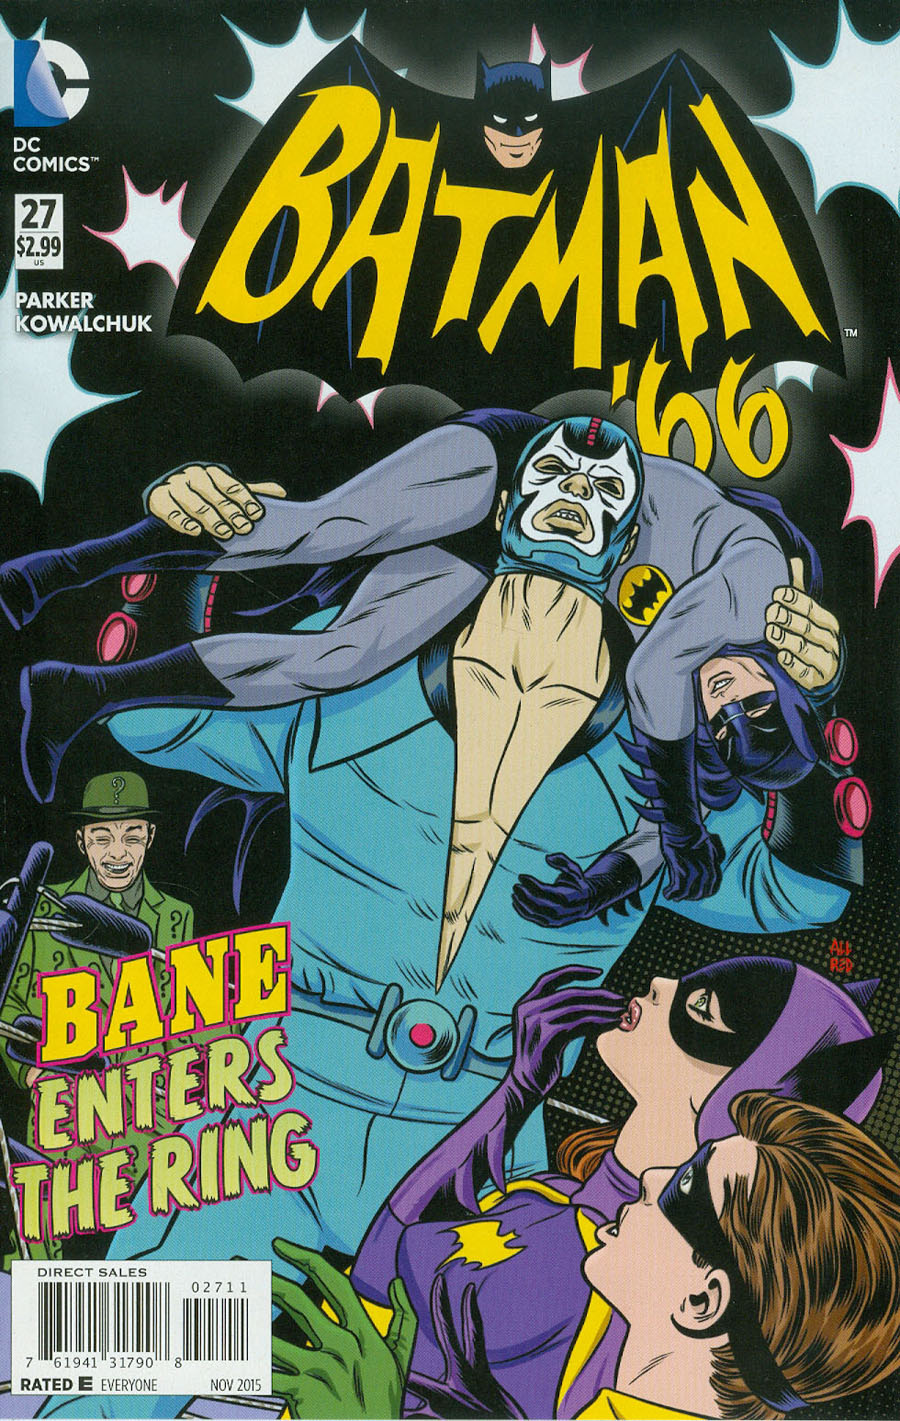 Batman 66 #27